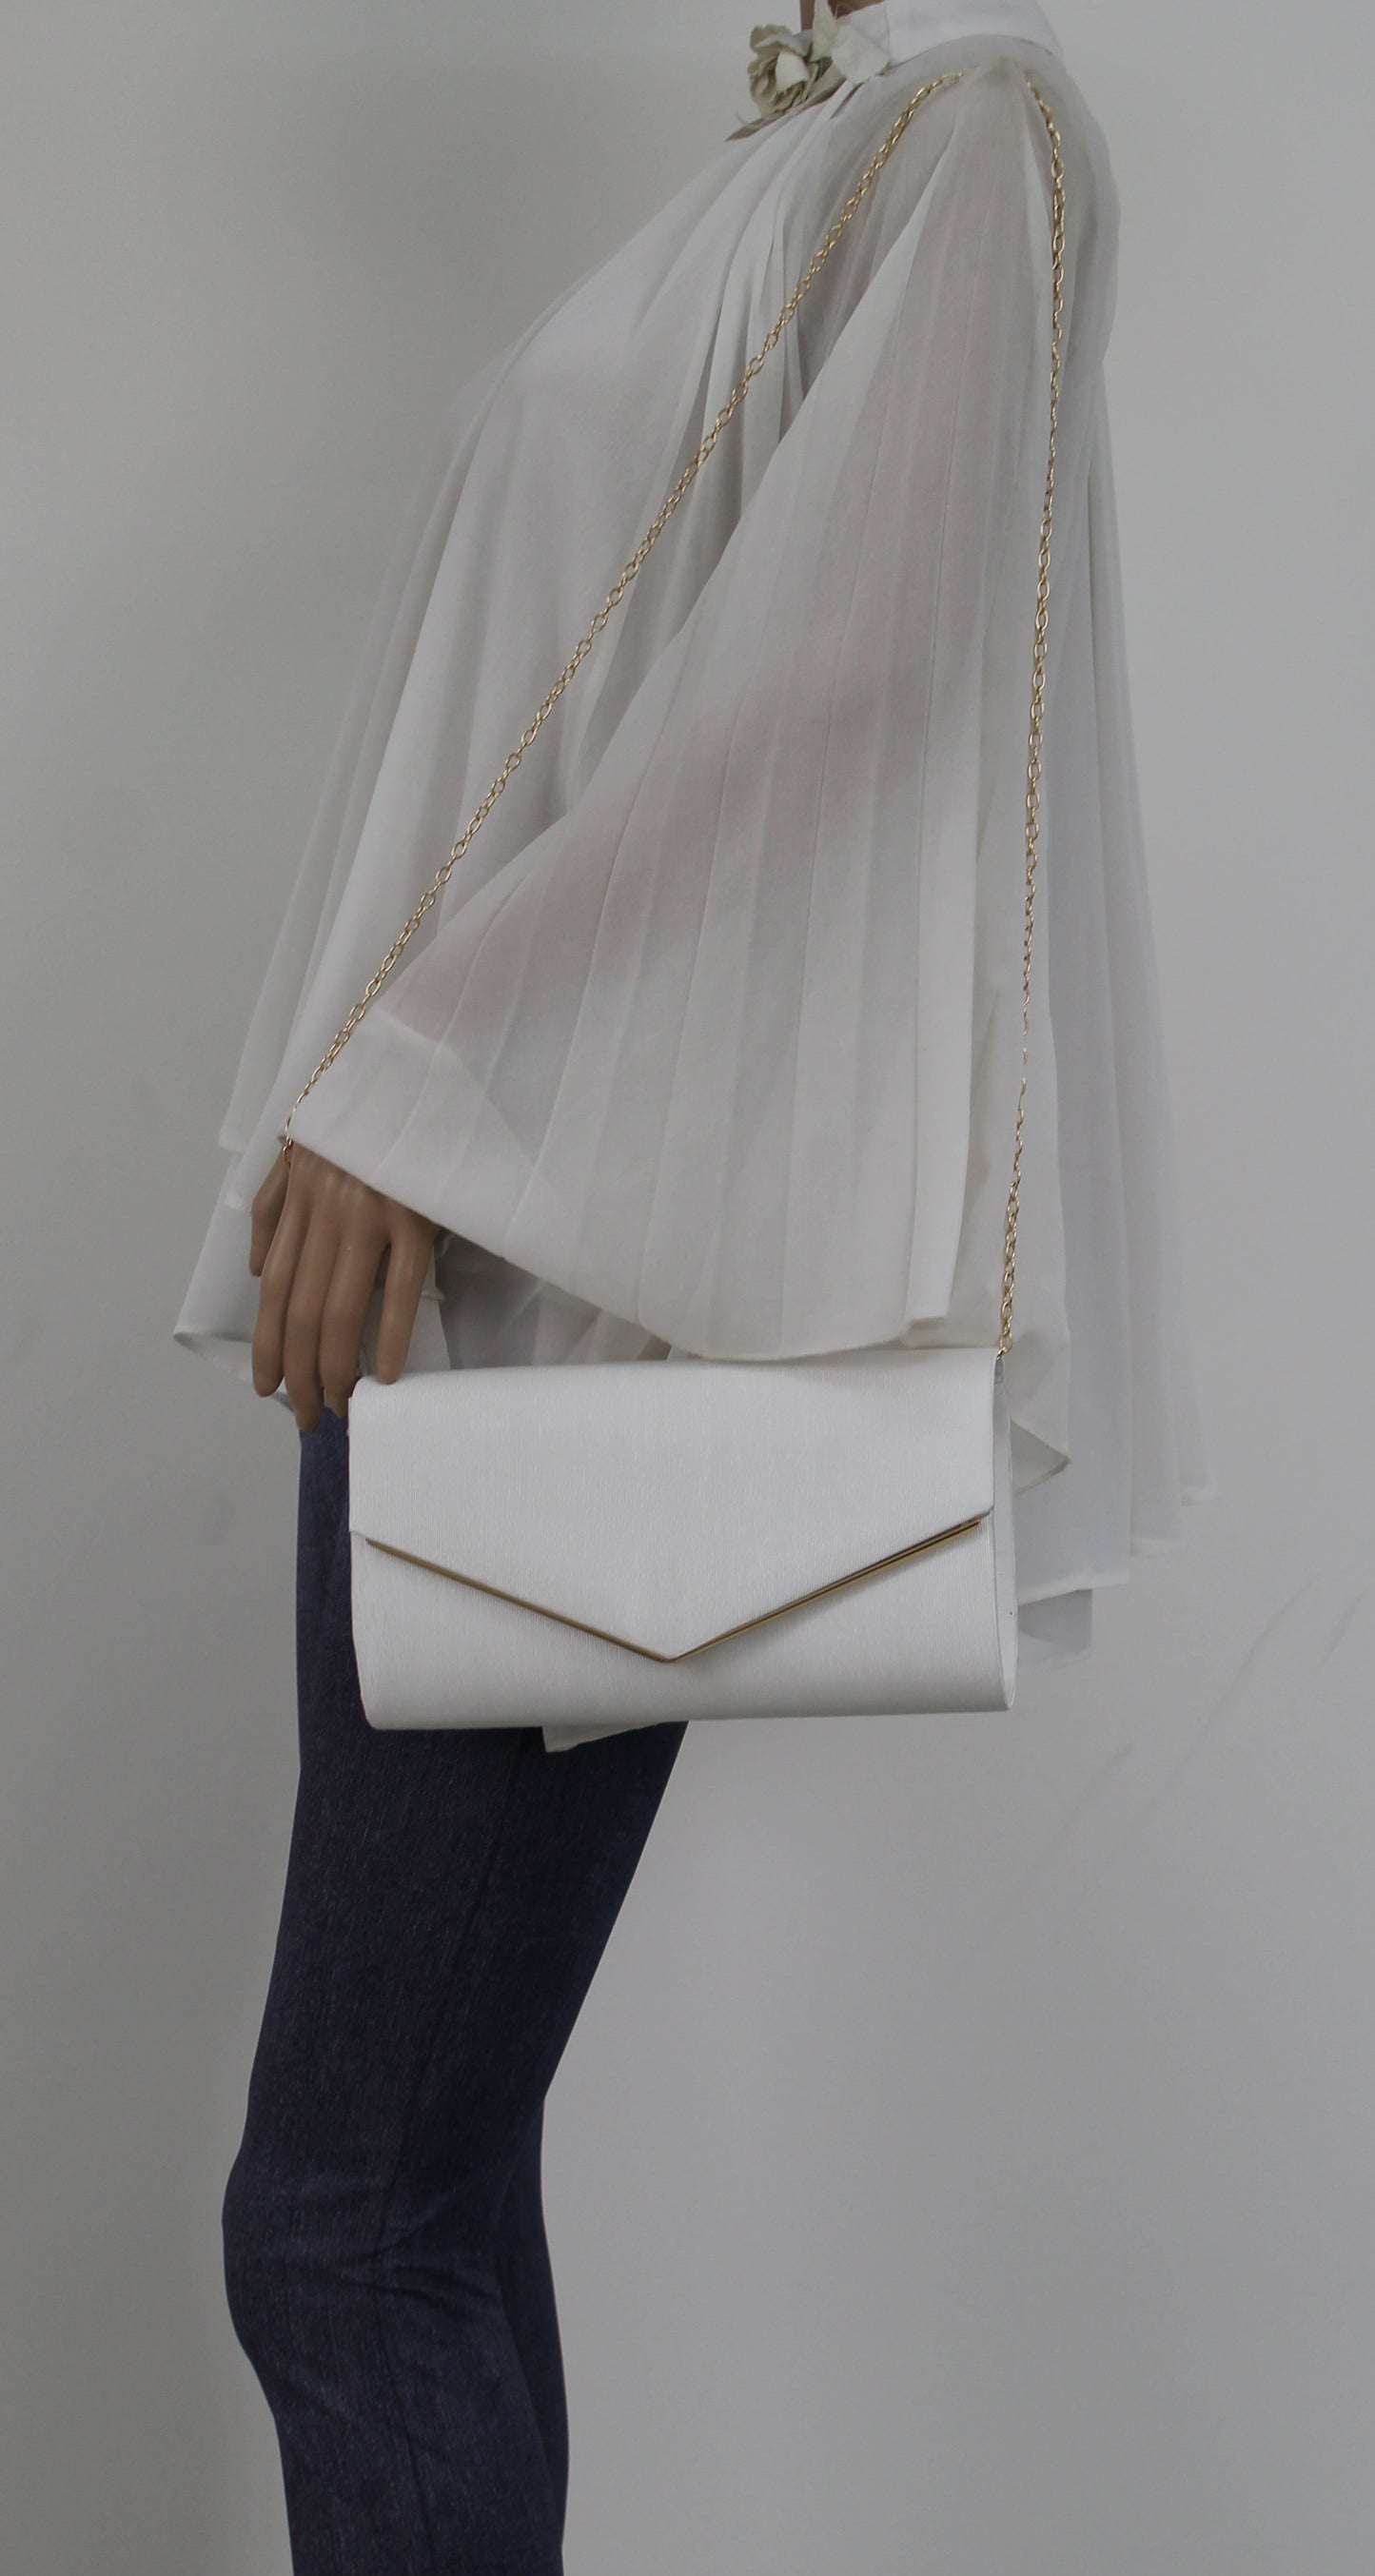 Alison Satin Envelope Clutch Bag White